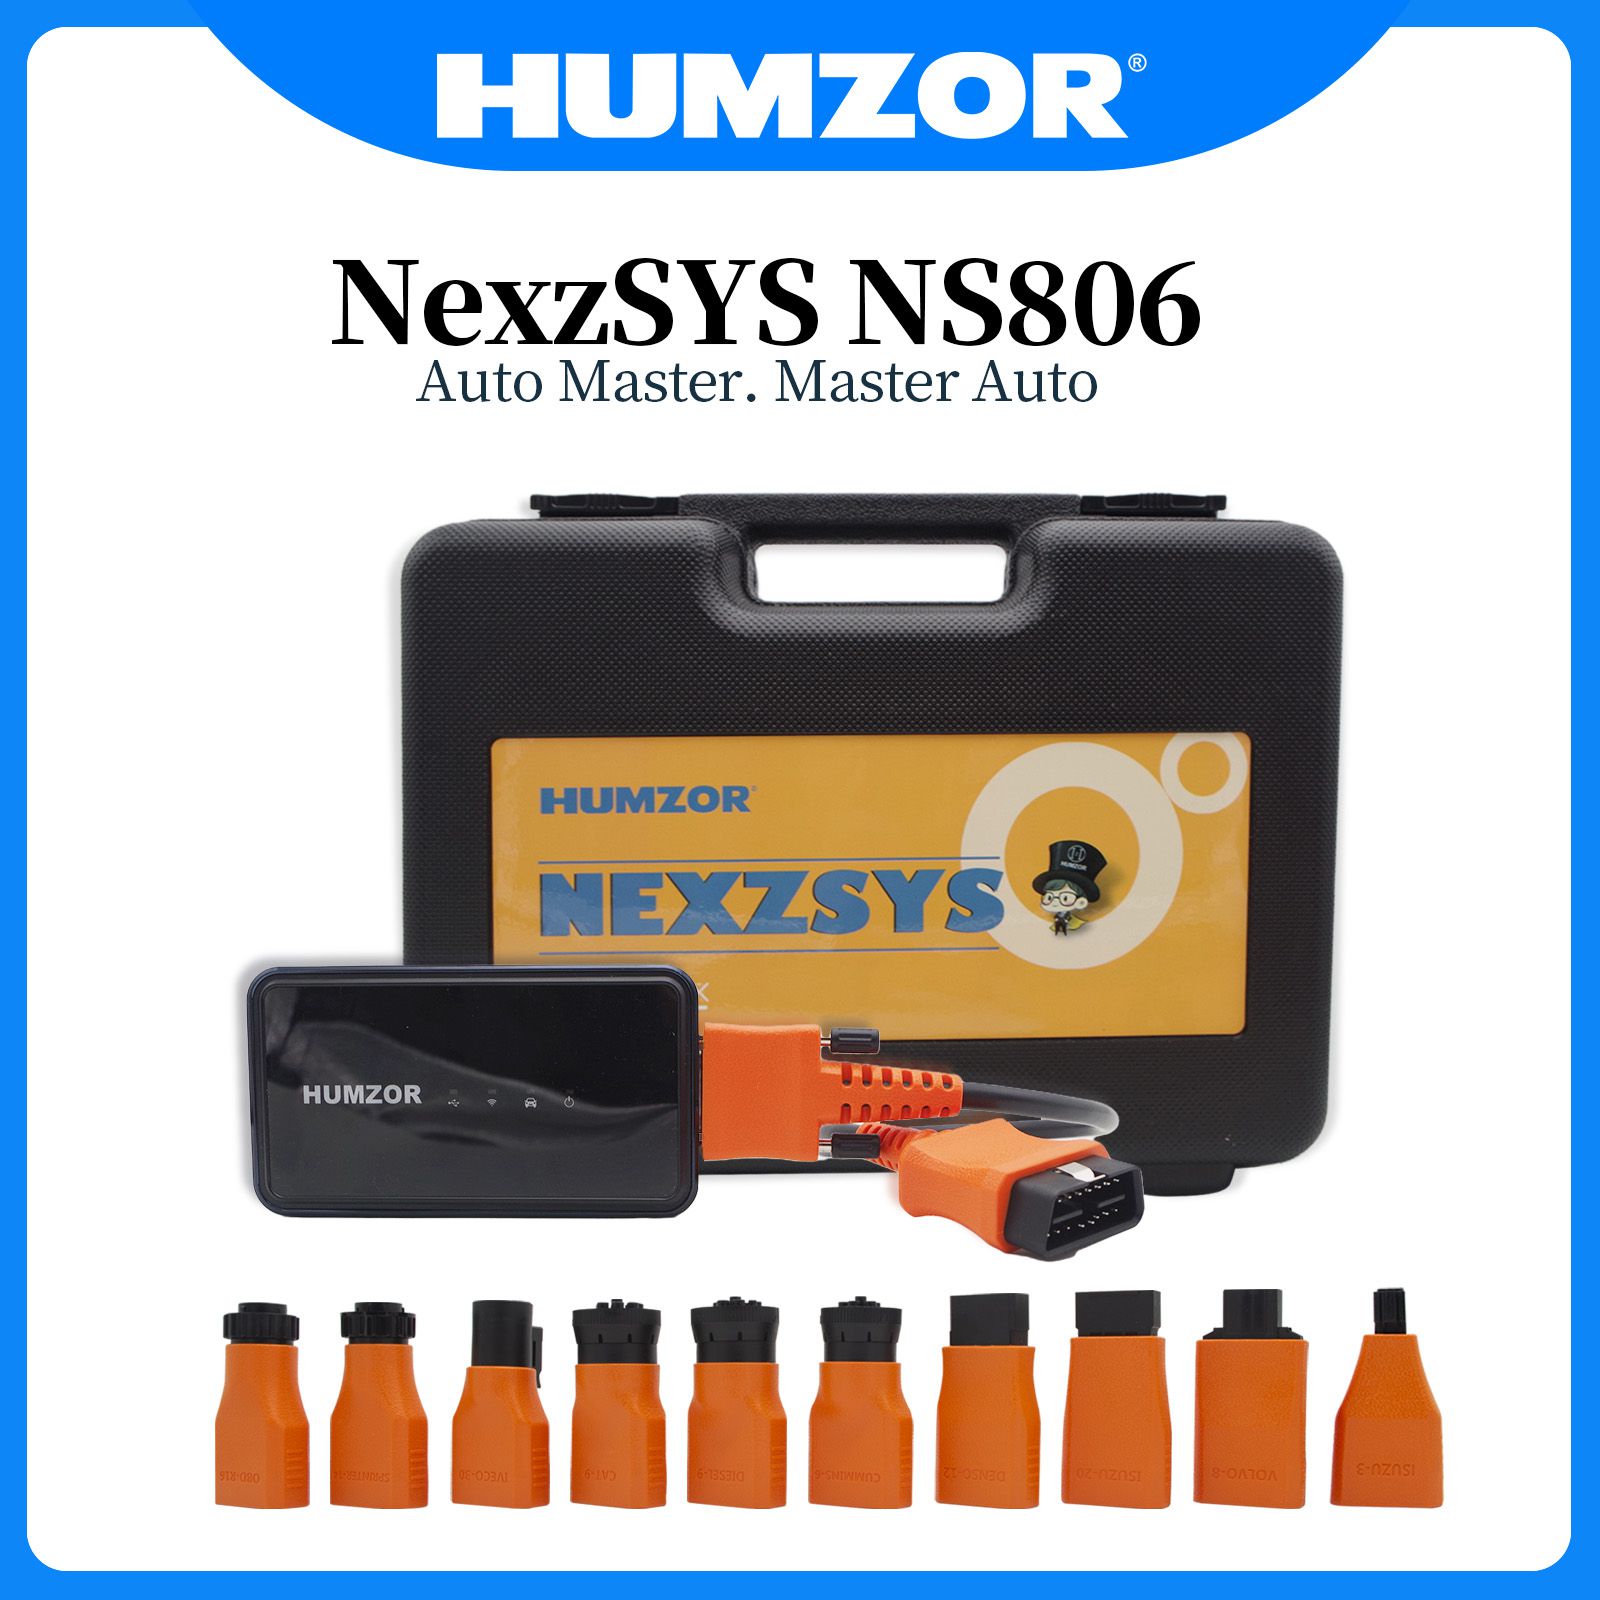 HUMZOR NexzSYS NS806 트럭 진단 도구는 Windows 시스템 18 특수 기능을 지원합니다.